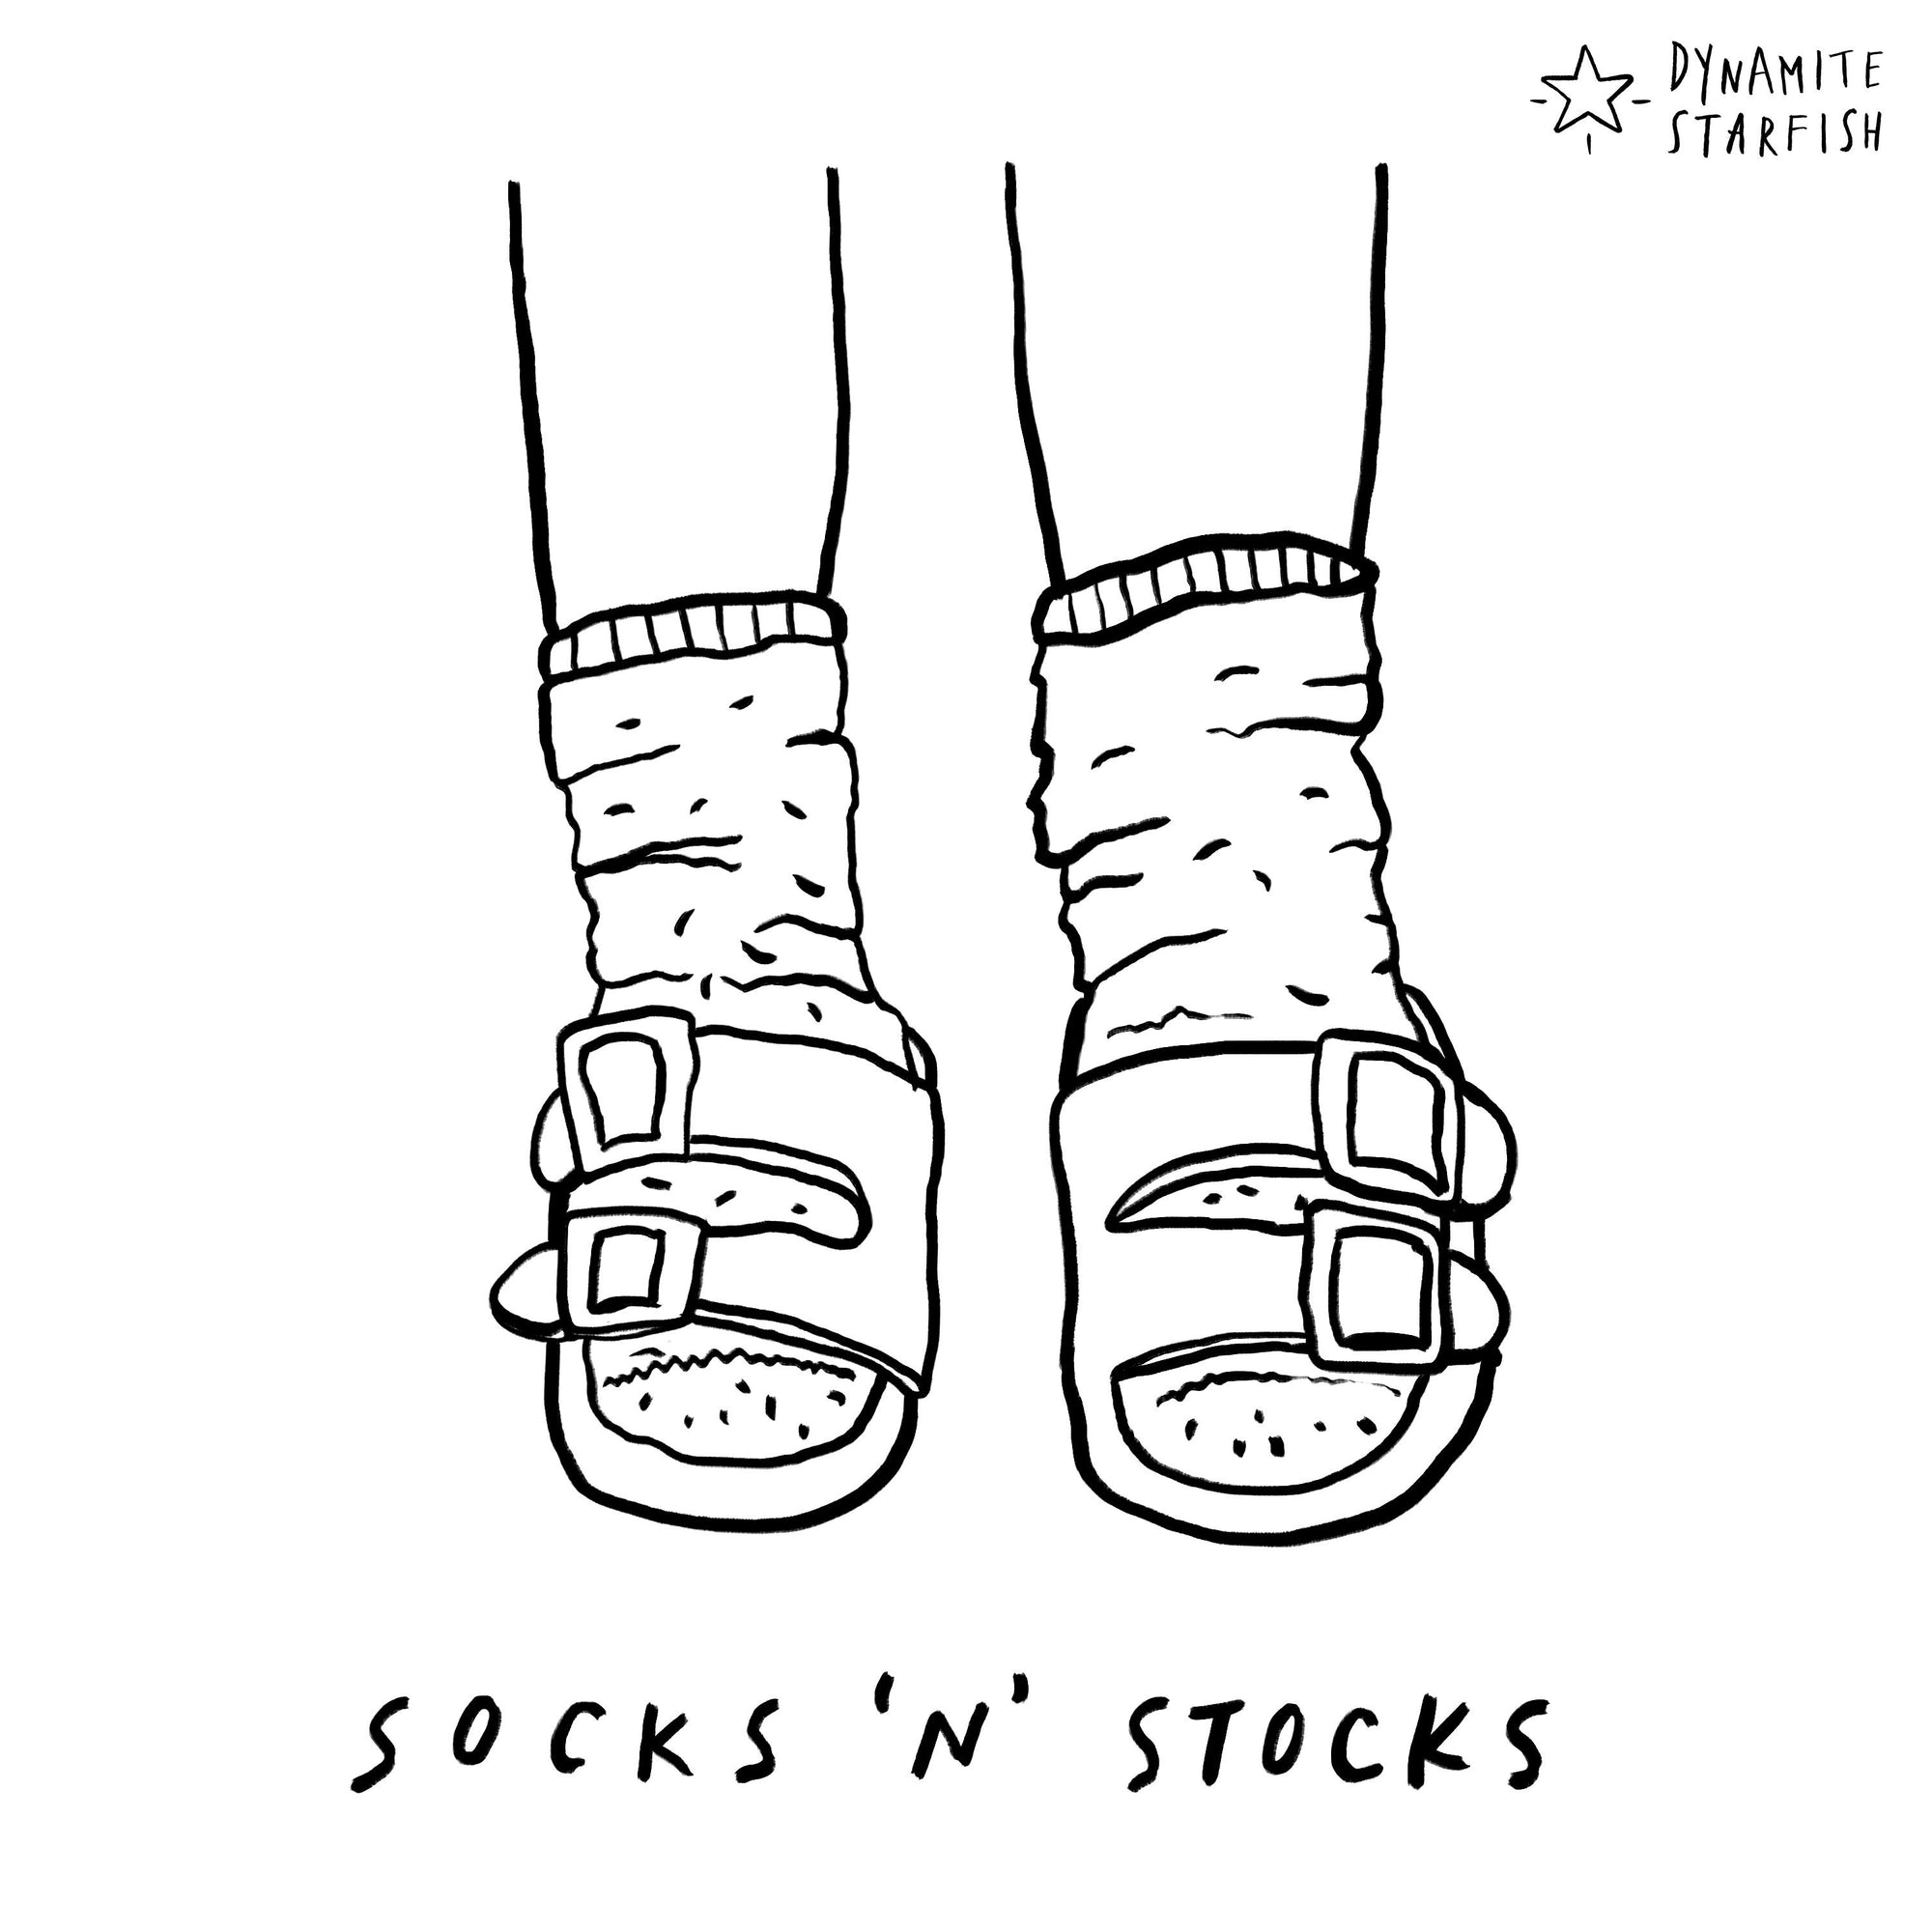 100 Drawings about Climbing — Socks 'n' Stocks | Dynamite Starfish